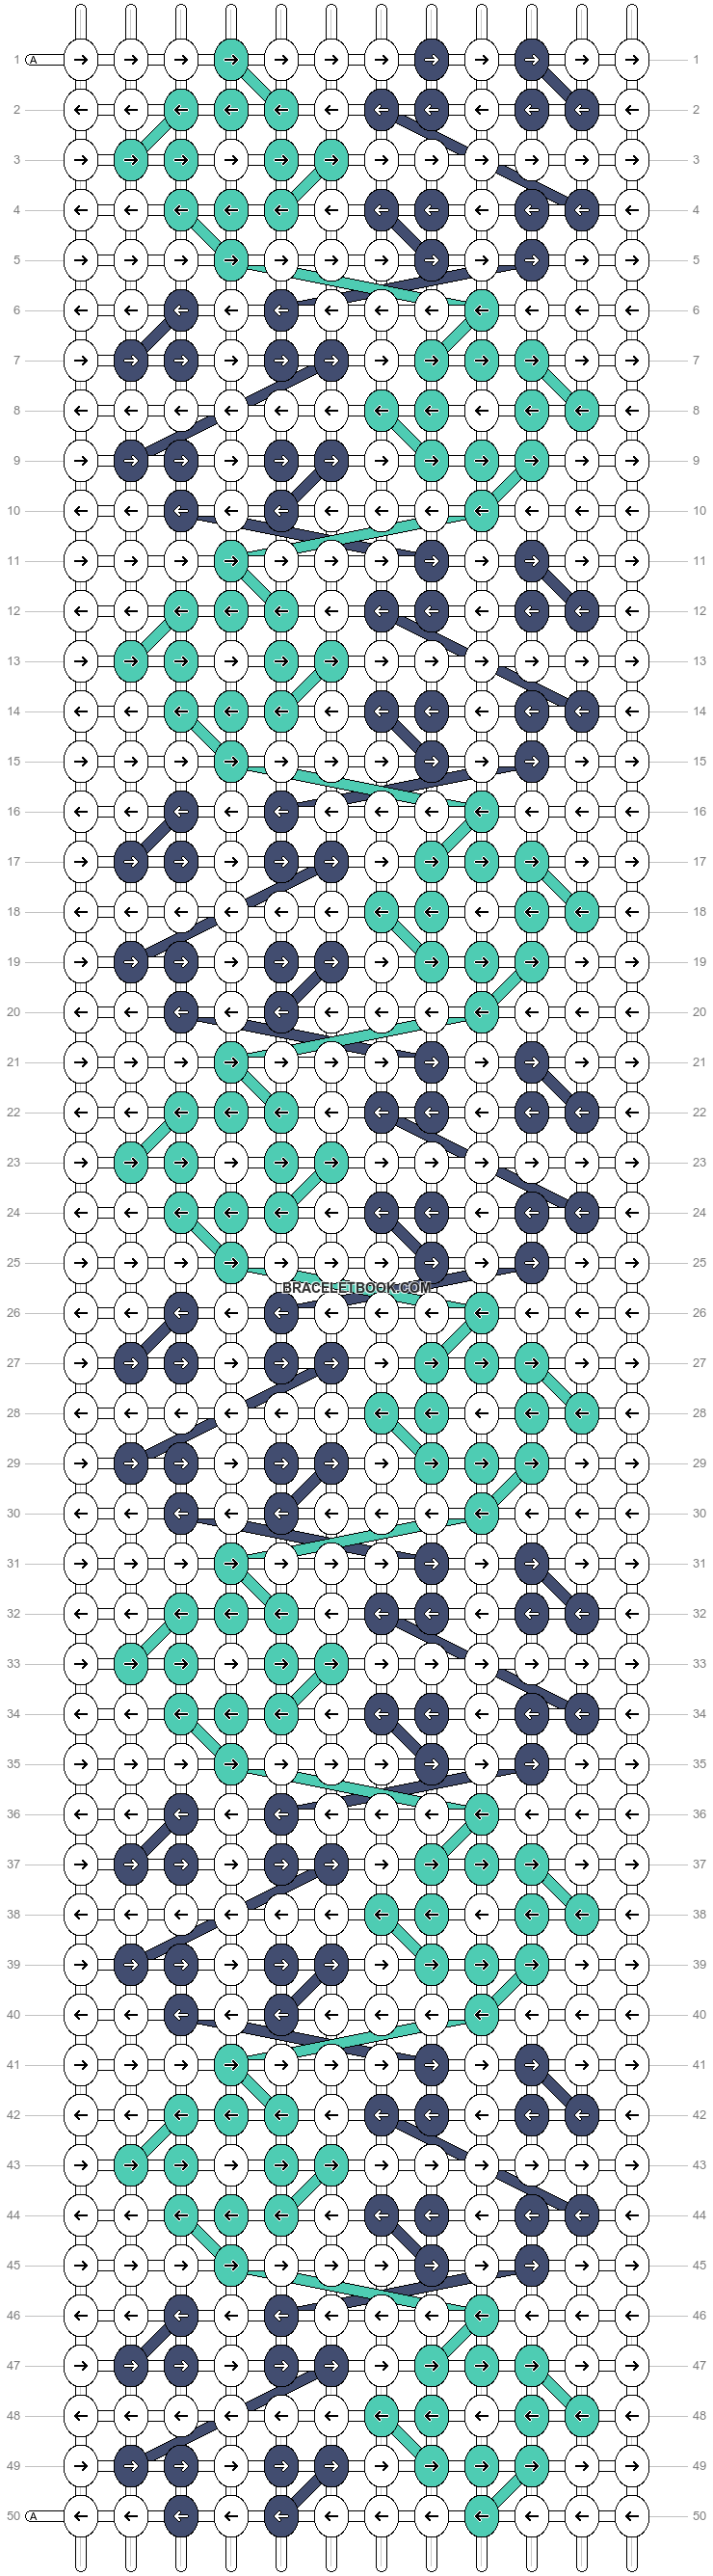 Alpha pattern #23662 pattern